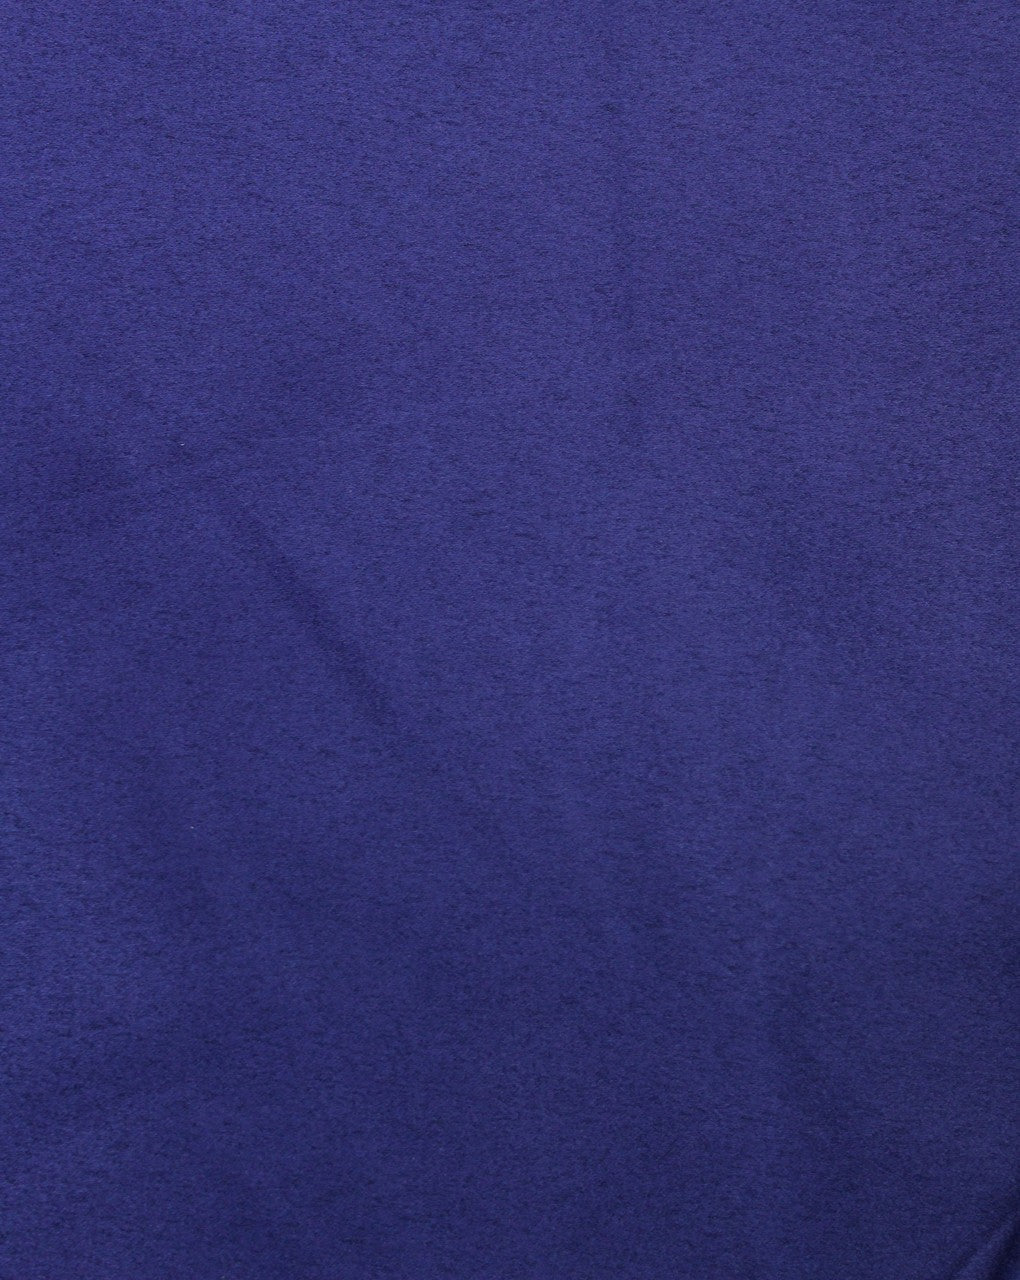 Plain Dark Blue Polyester Suede Fabric